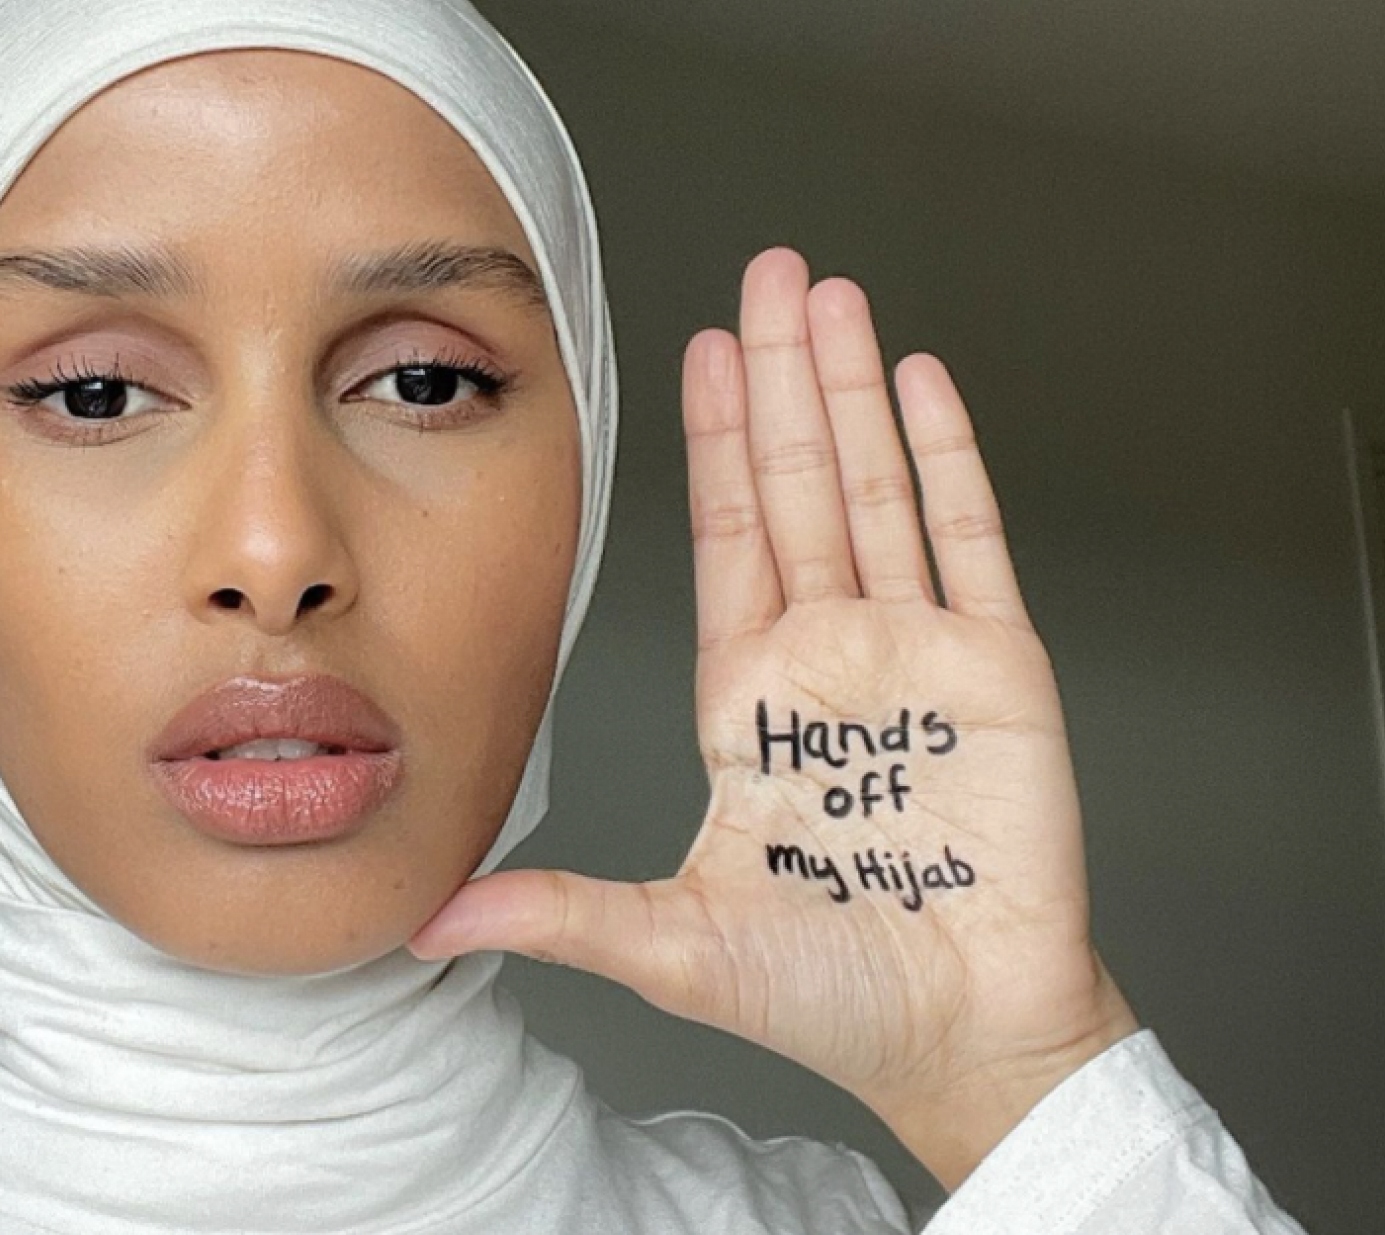 France Social Media Reacts To Bill Aiming To Ban Hijab For Minors